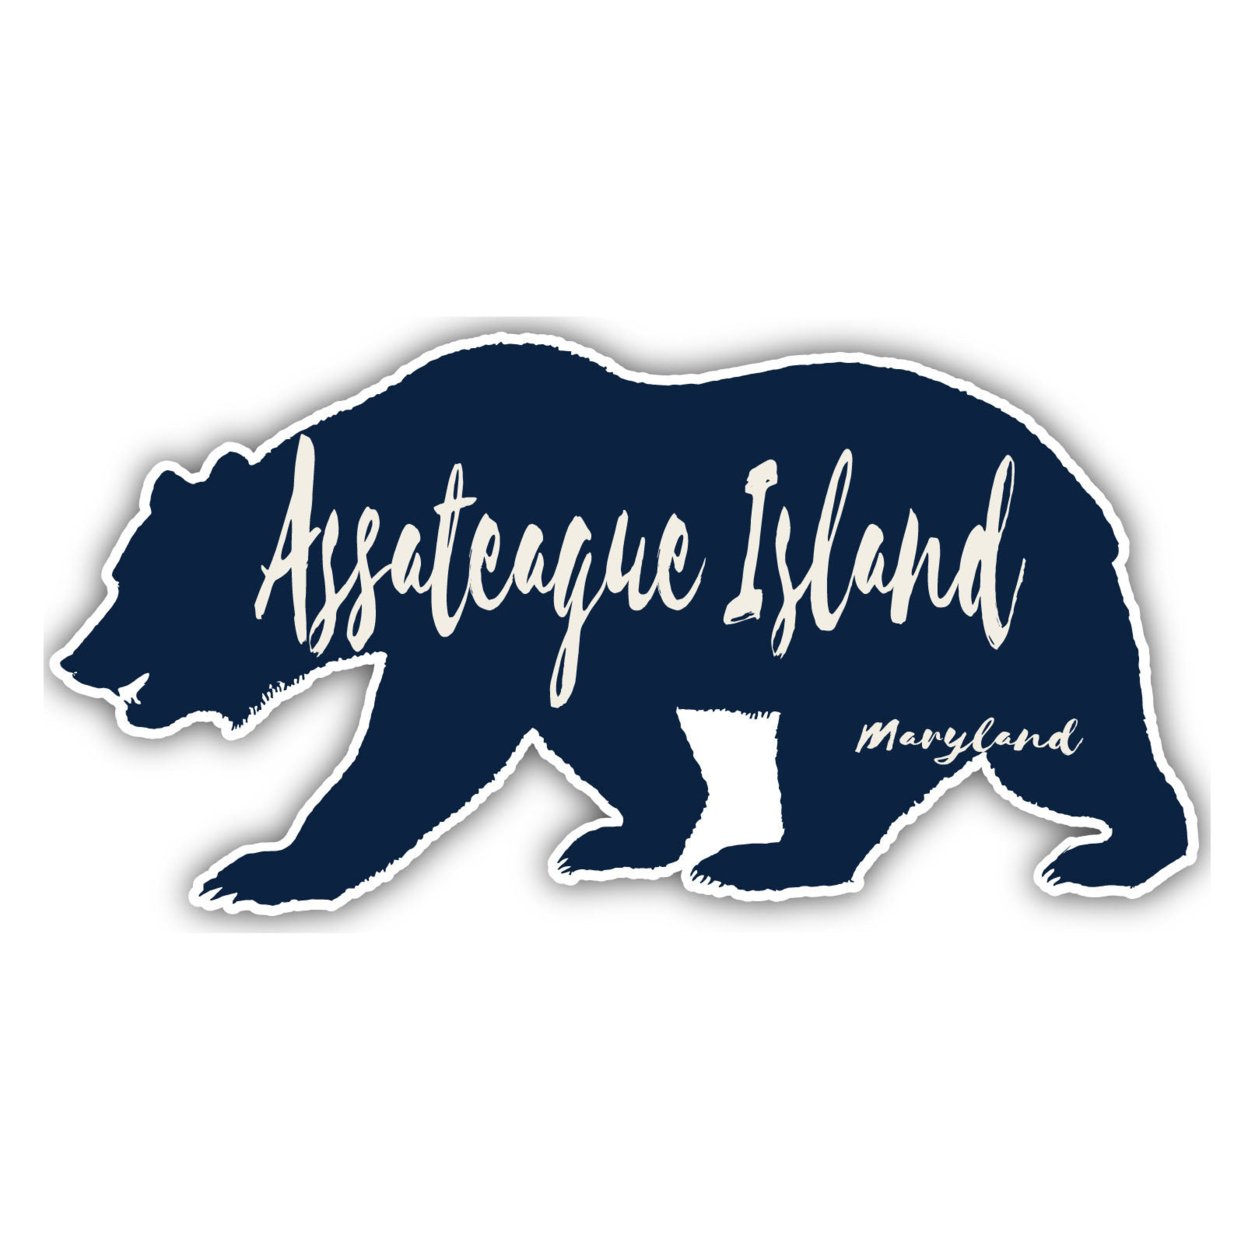 Assateague Island Maryland Souvenir Decorative Stickers (Choose Theme And Size) - Single Unit, 10-Inch, Bear